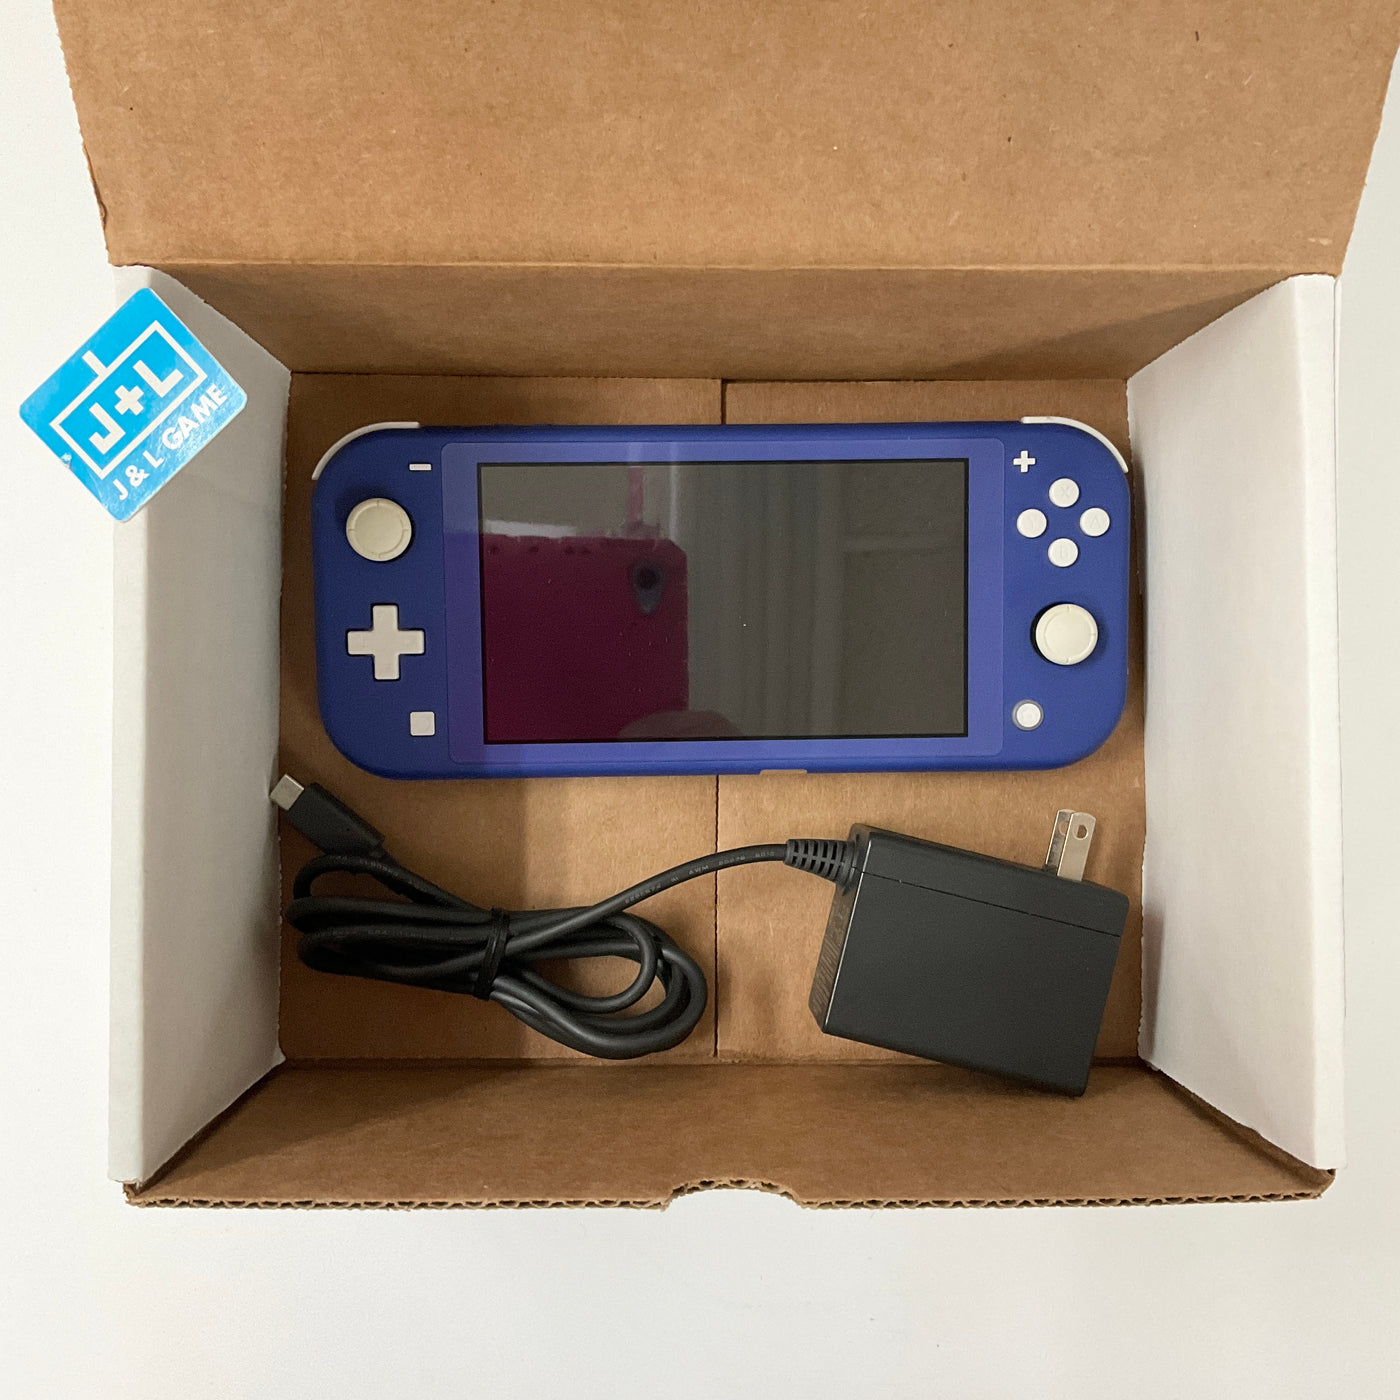 Nintendo Switch Lite Handheld Console Blue | GameStop